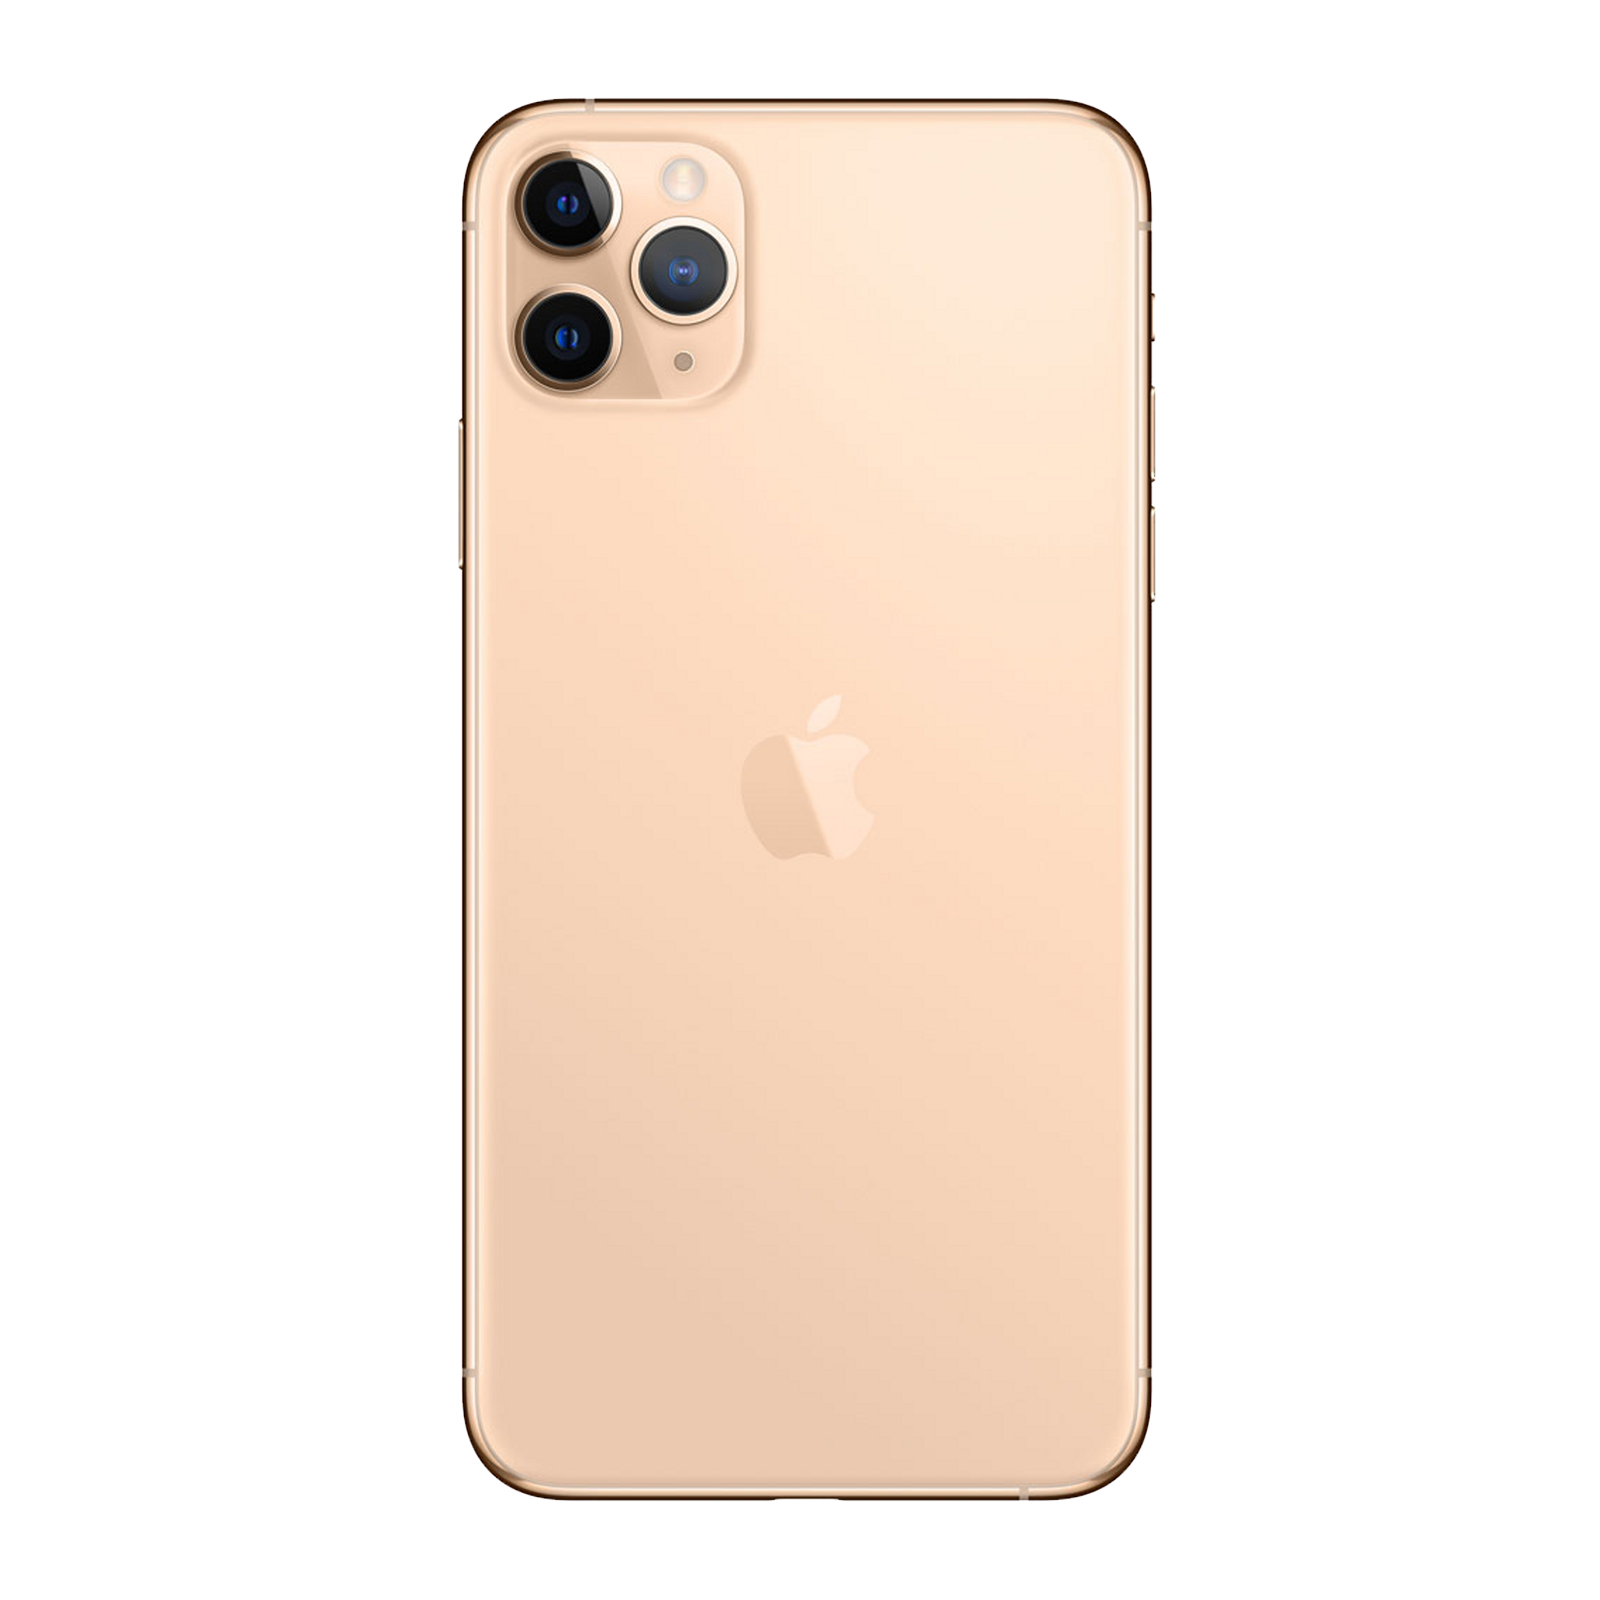 Apple iPhone 11 Pro 512GB Gold Fair - AT&T